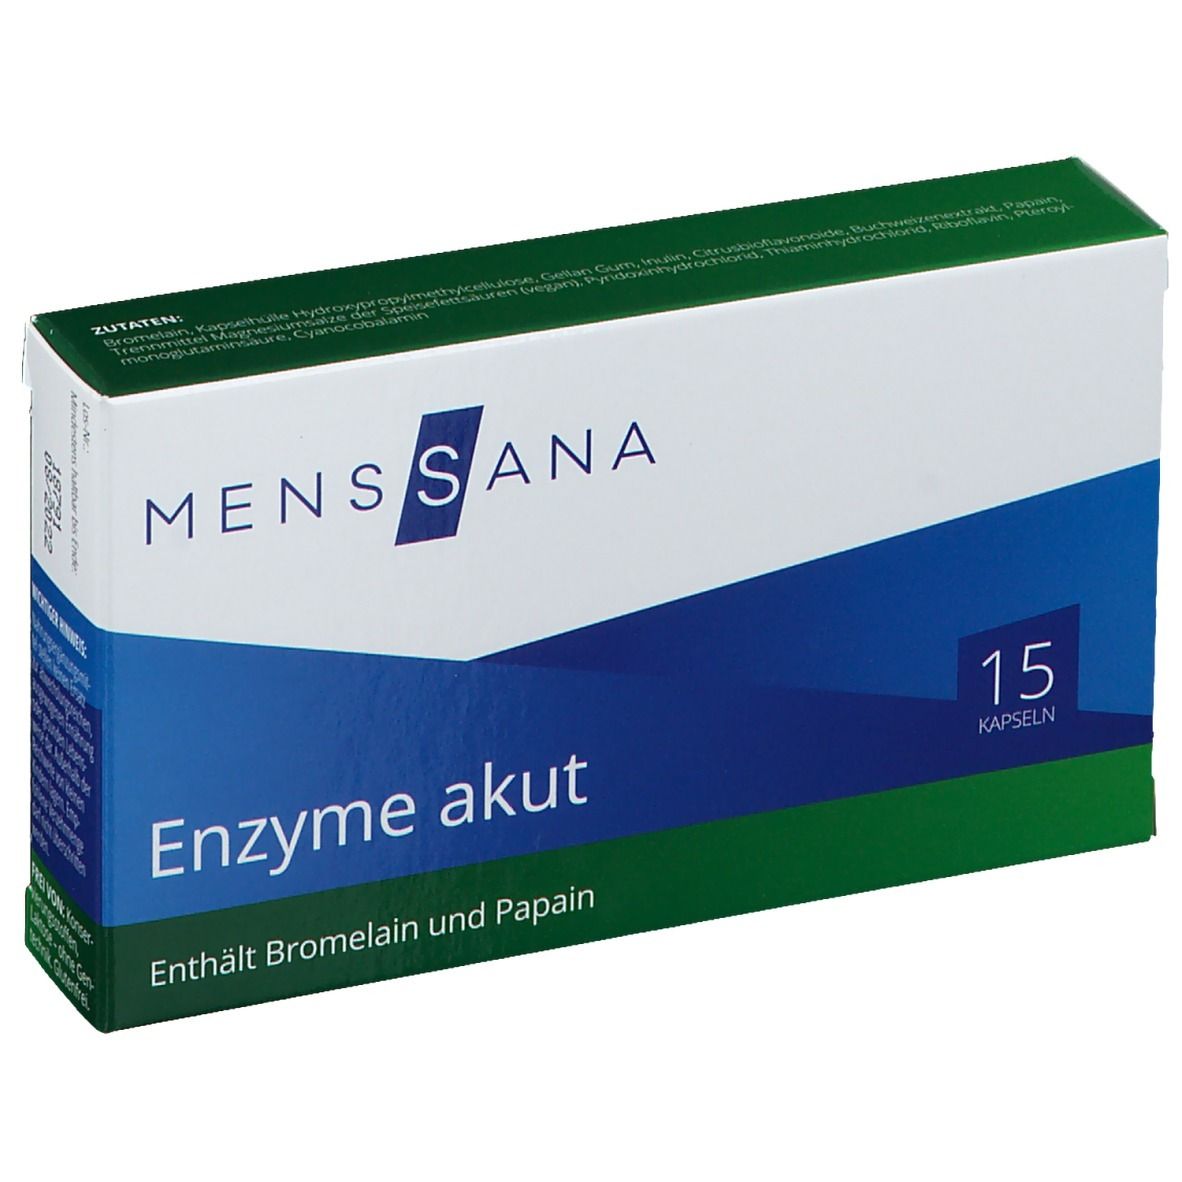 Image of MensSana Enzyme akut